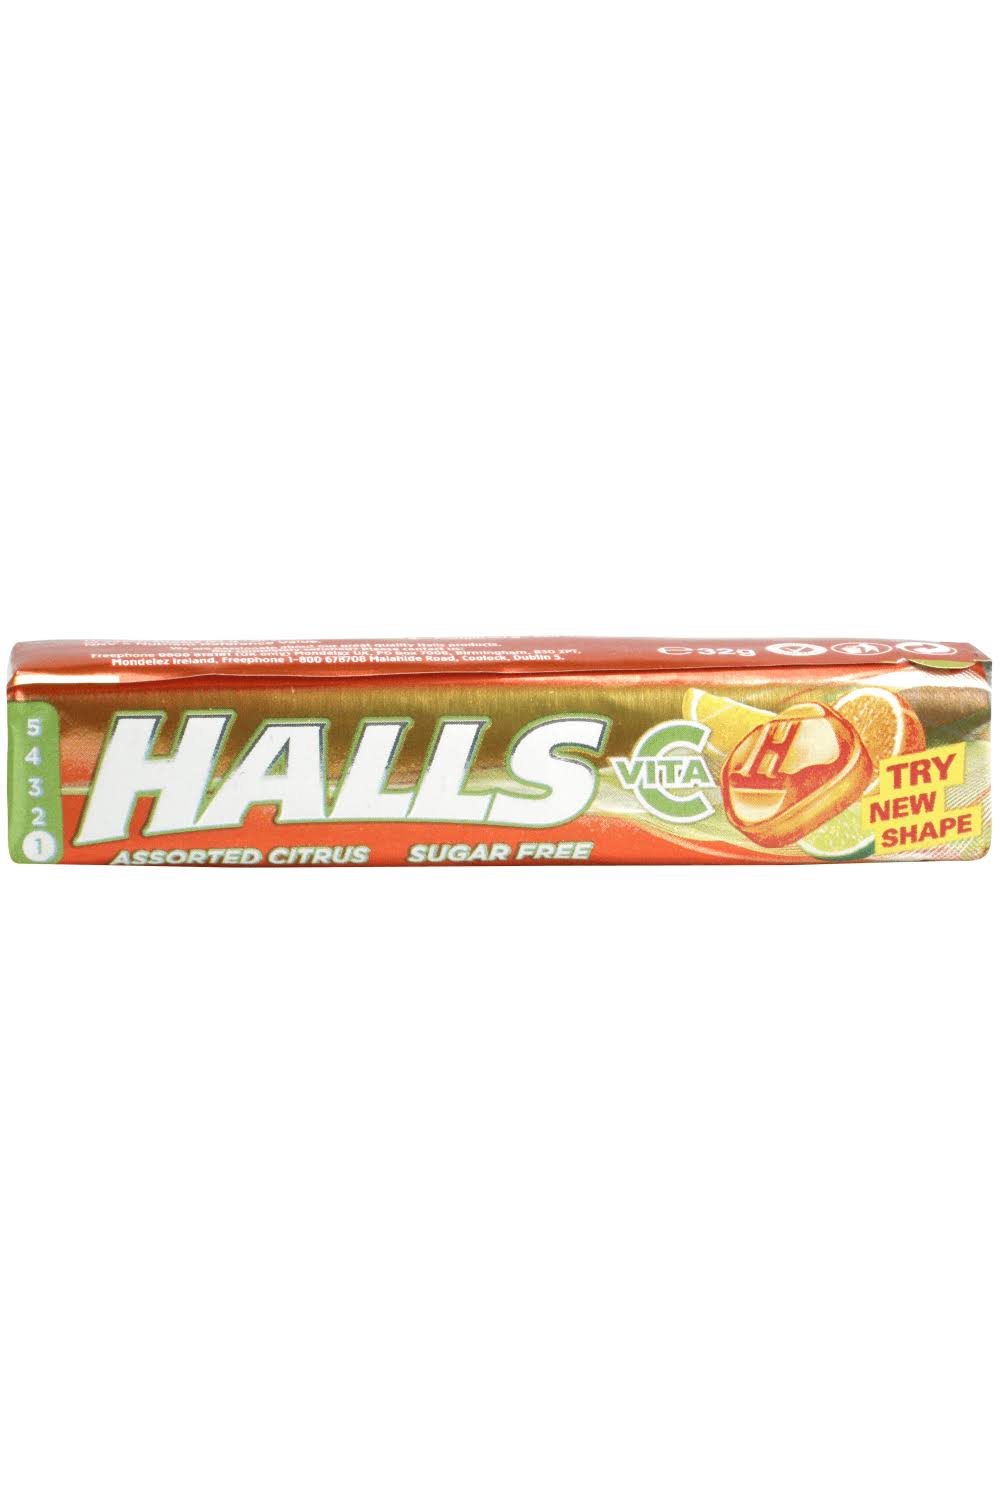 Halls Sugar Free Assorted Citrus Delivered to Canada